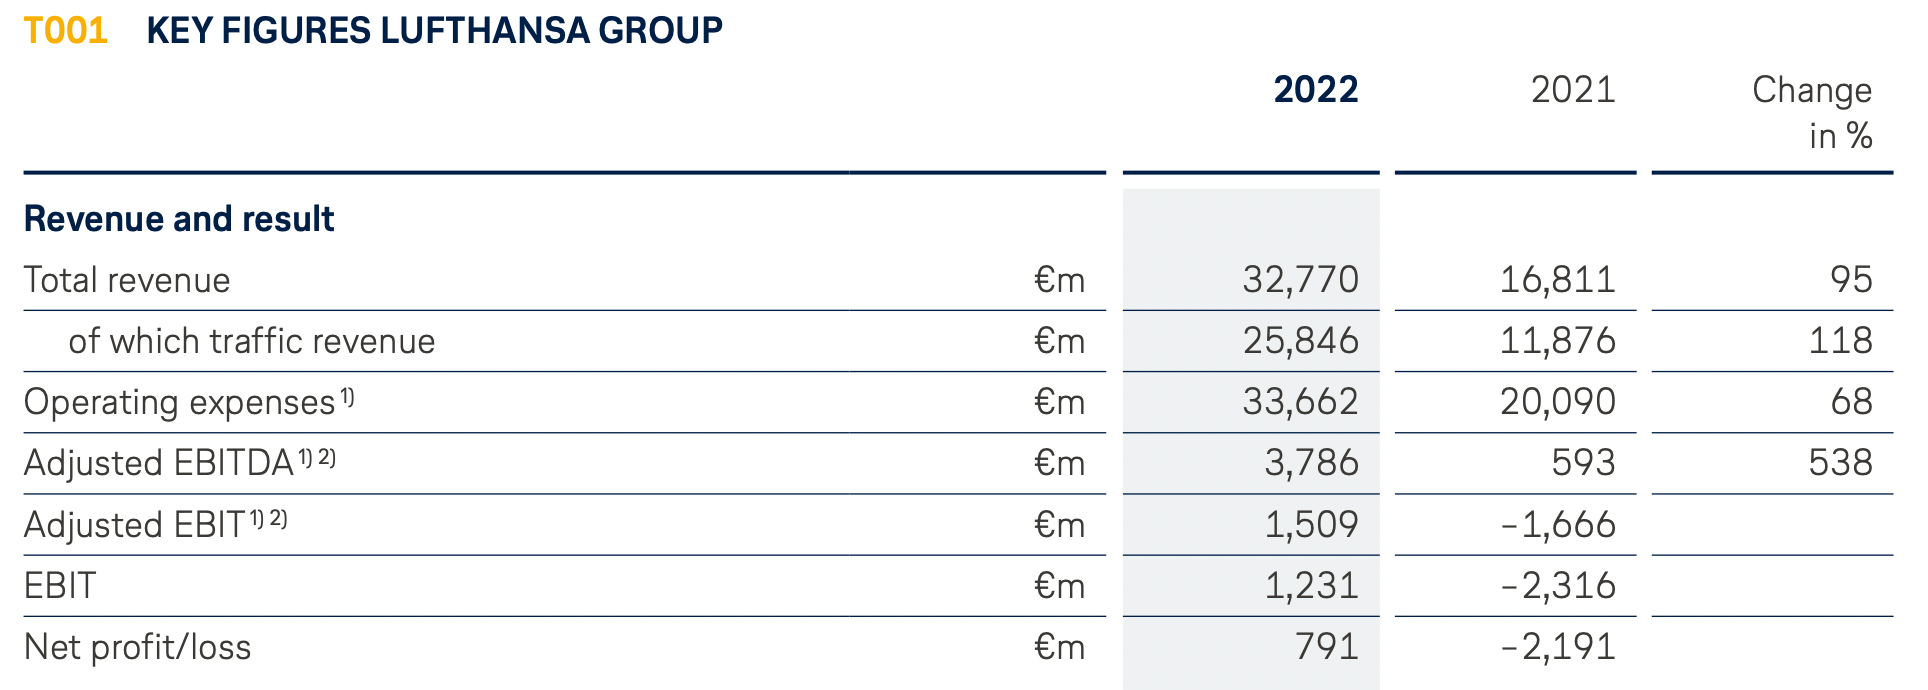 Lufthansa Group Revenue